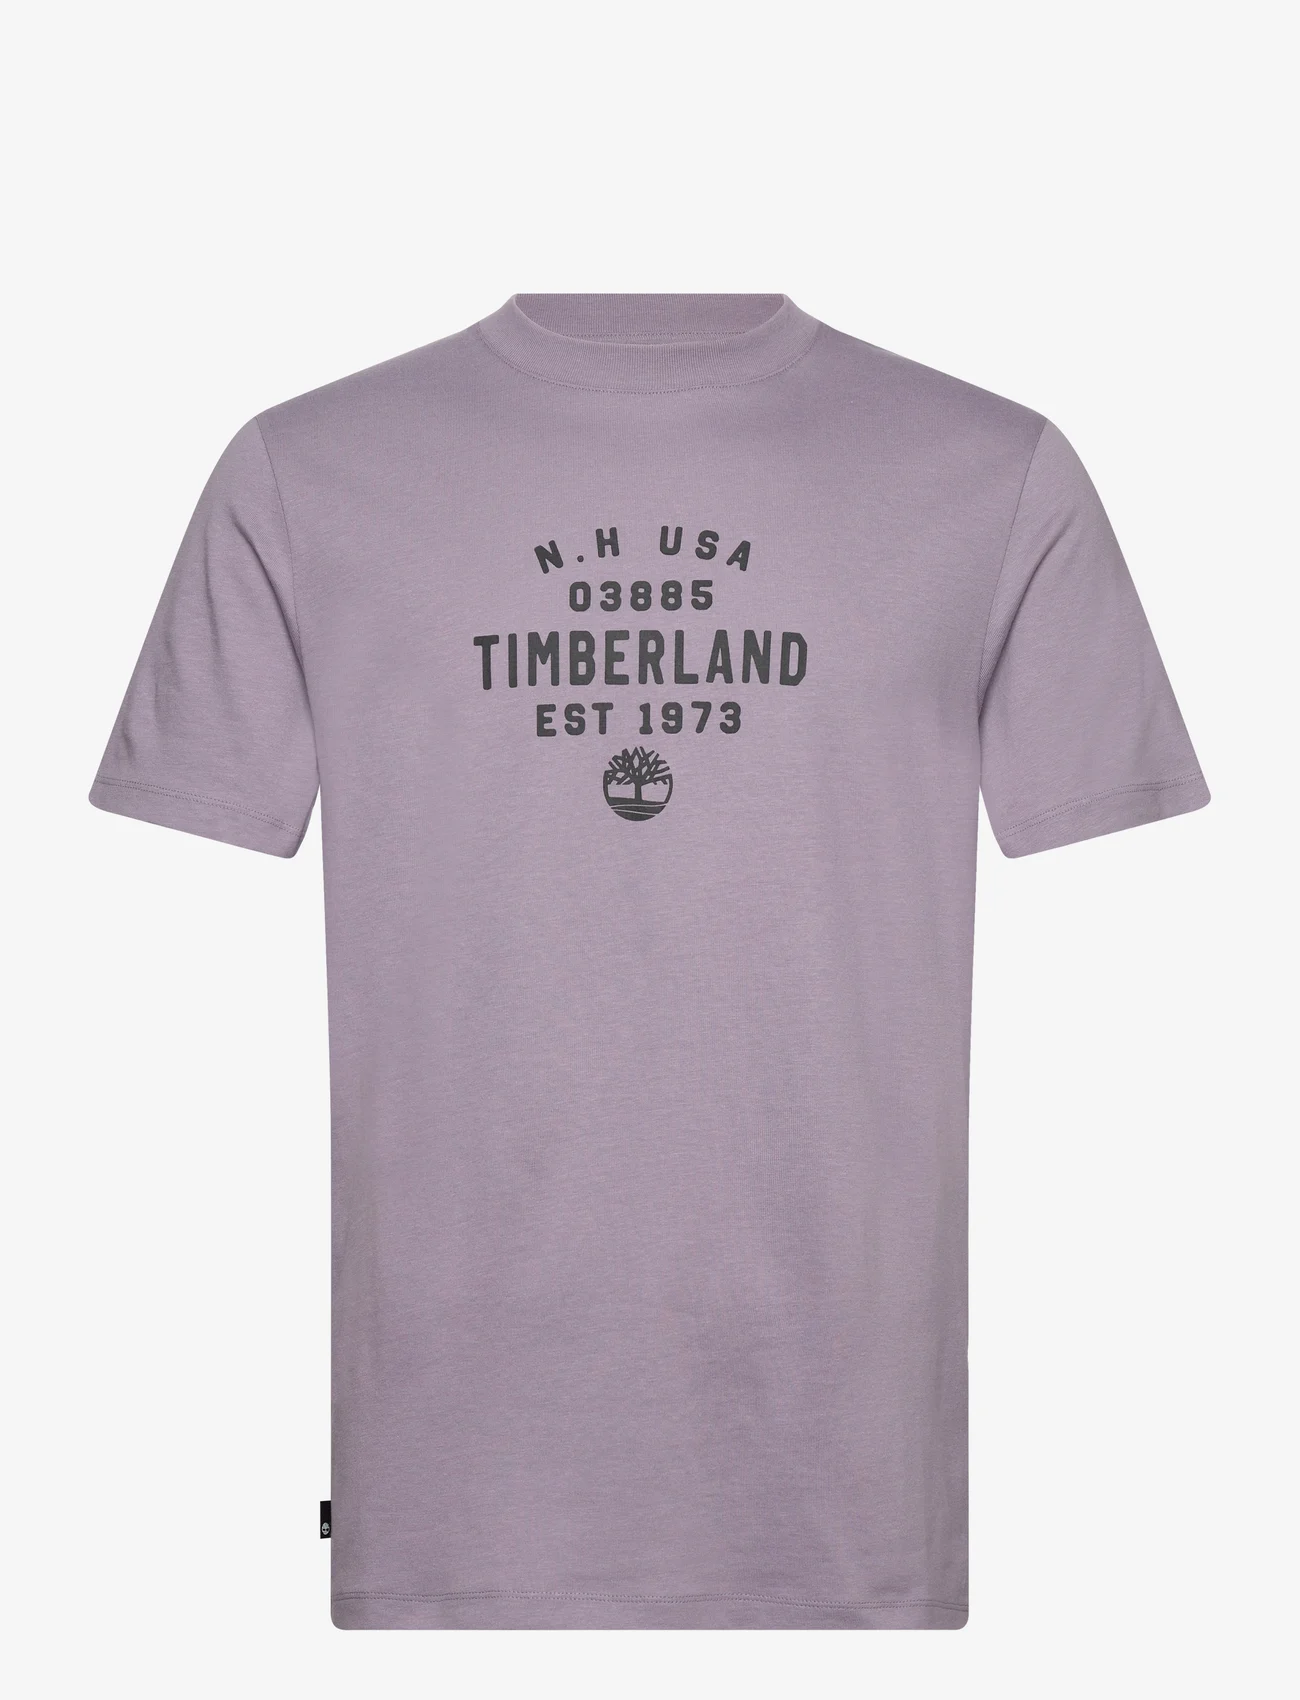 Timberland - REFIBRA Front Graphic Short Sleeve Tee PURPLE ASH - t-shirts - purple ash - 0